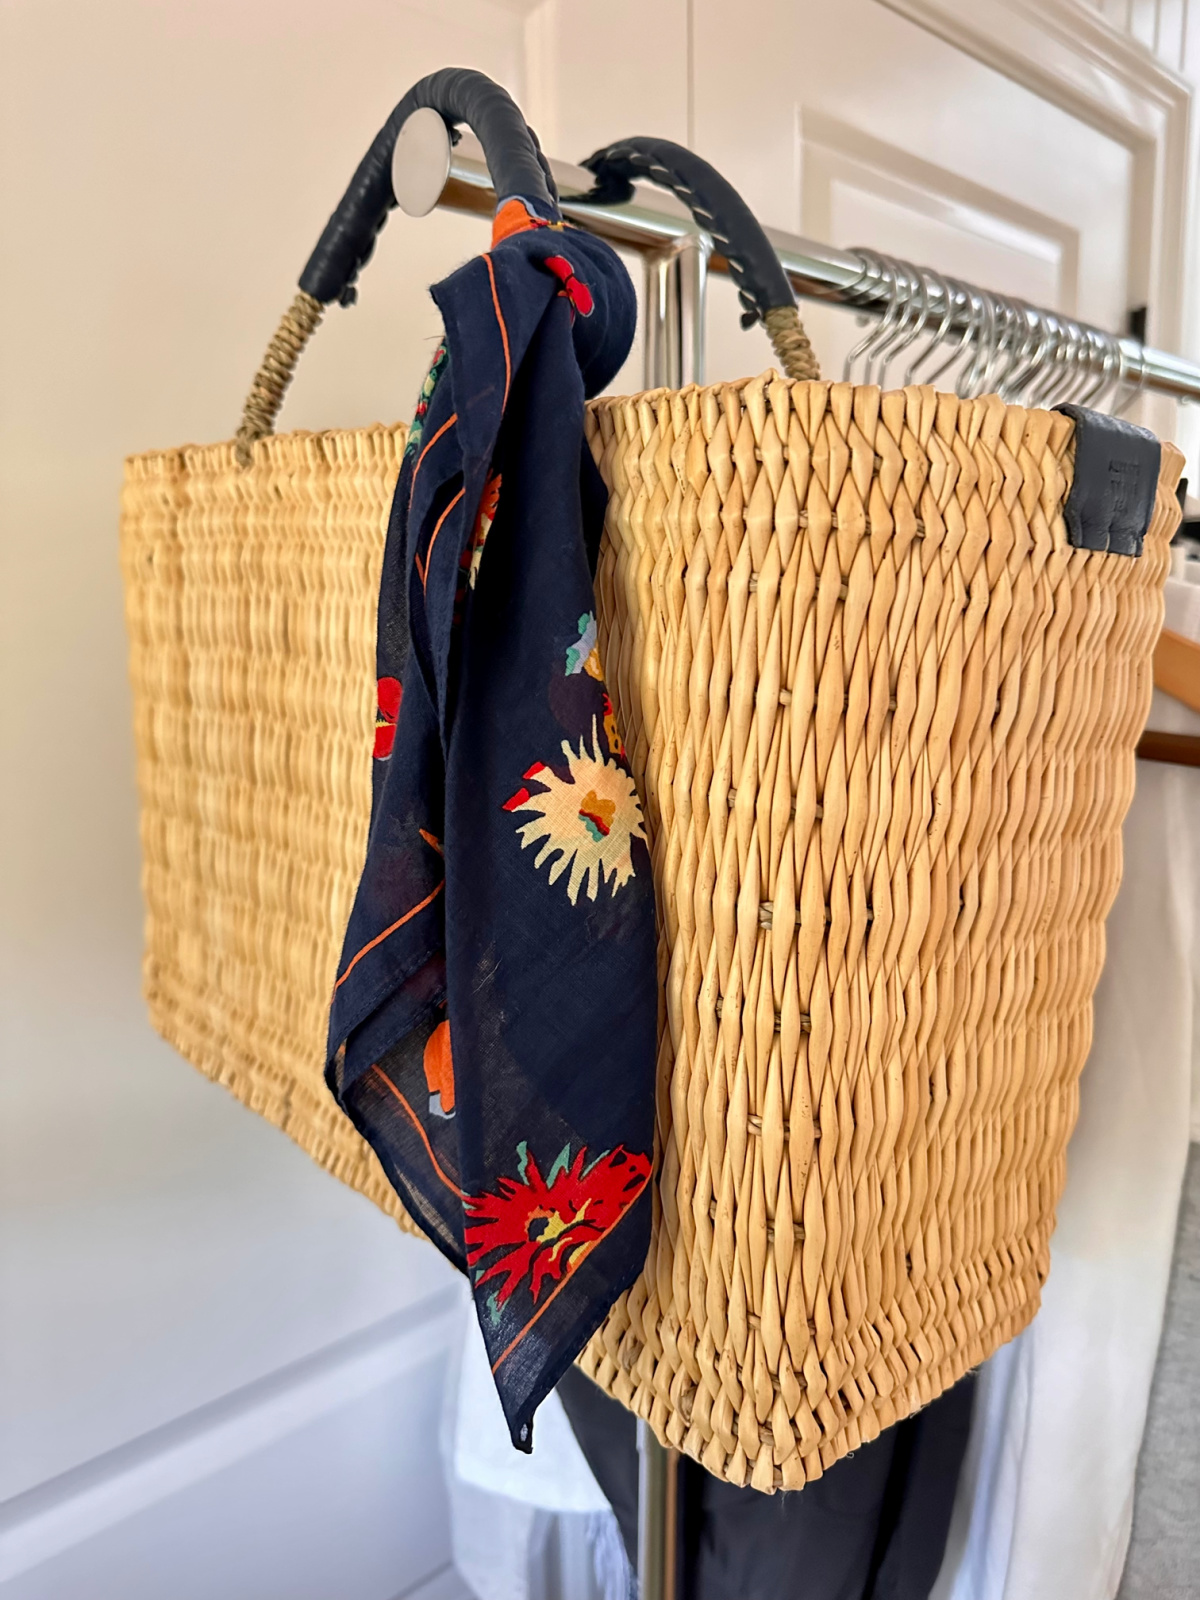 Basket bag and scarf hanging on rolling rack.